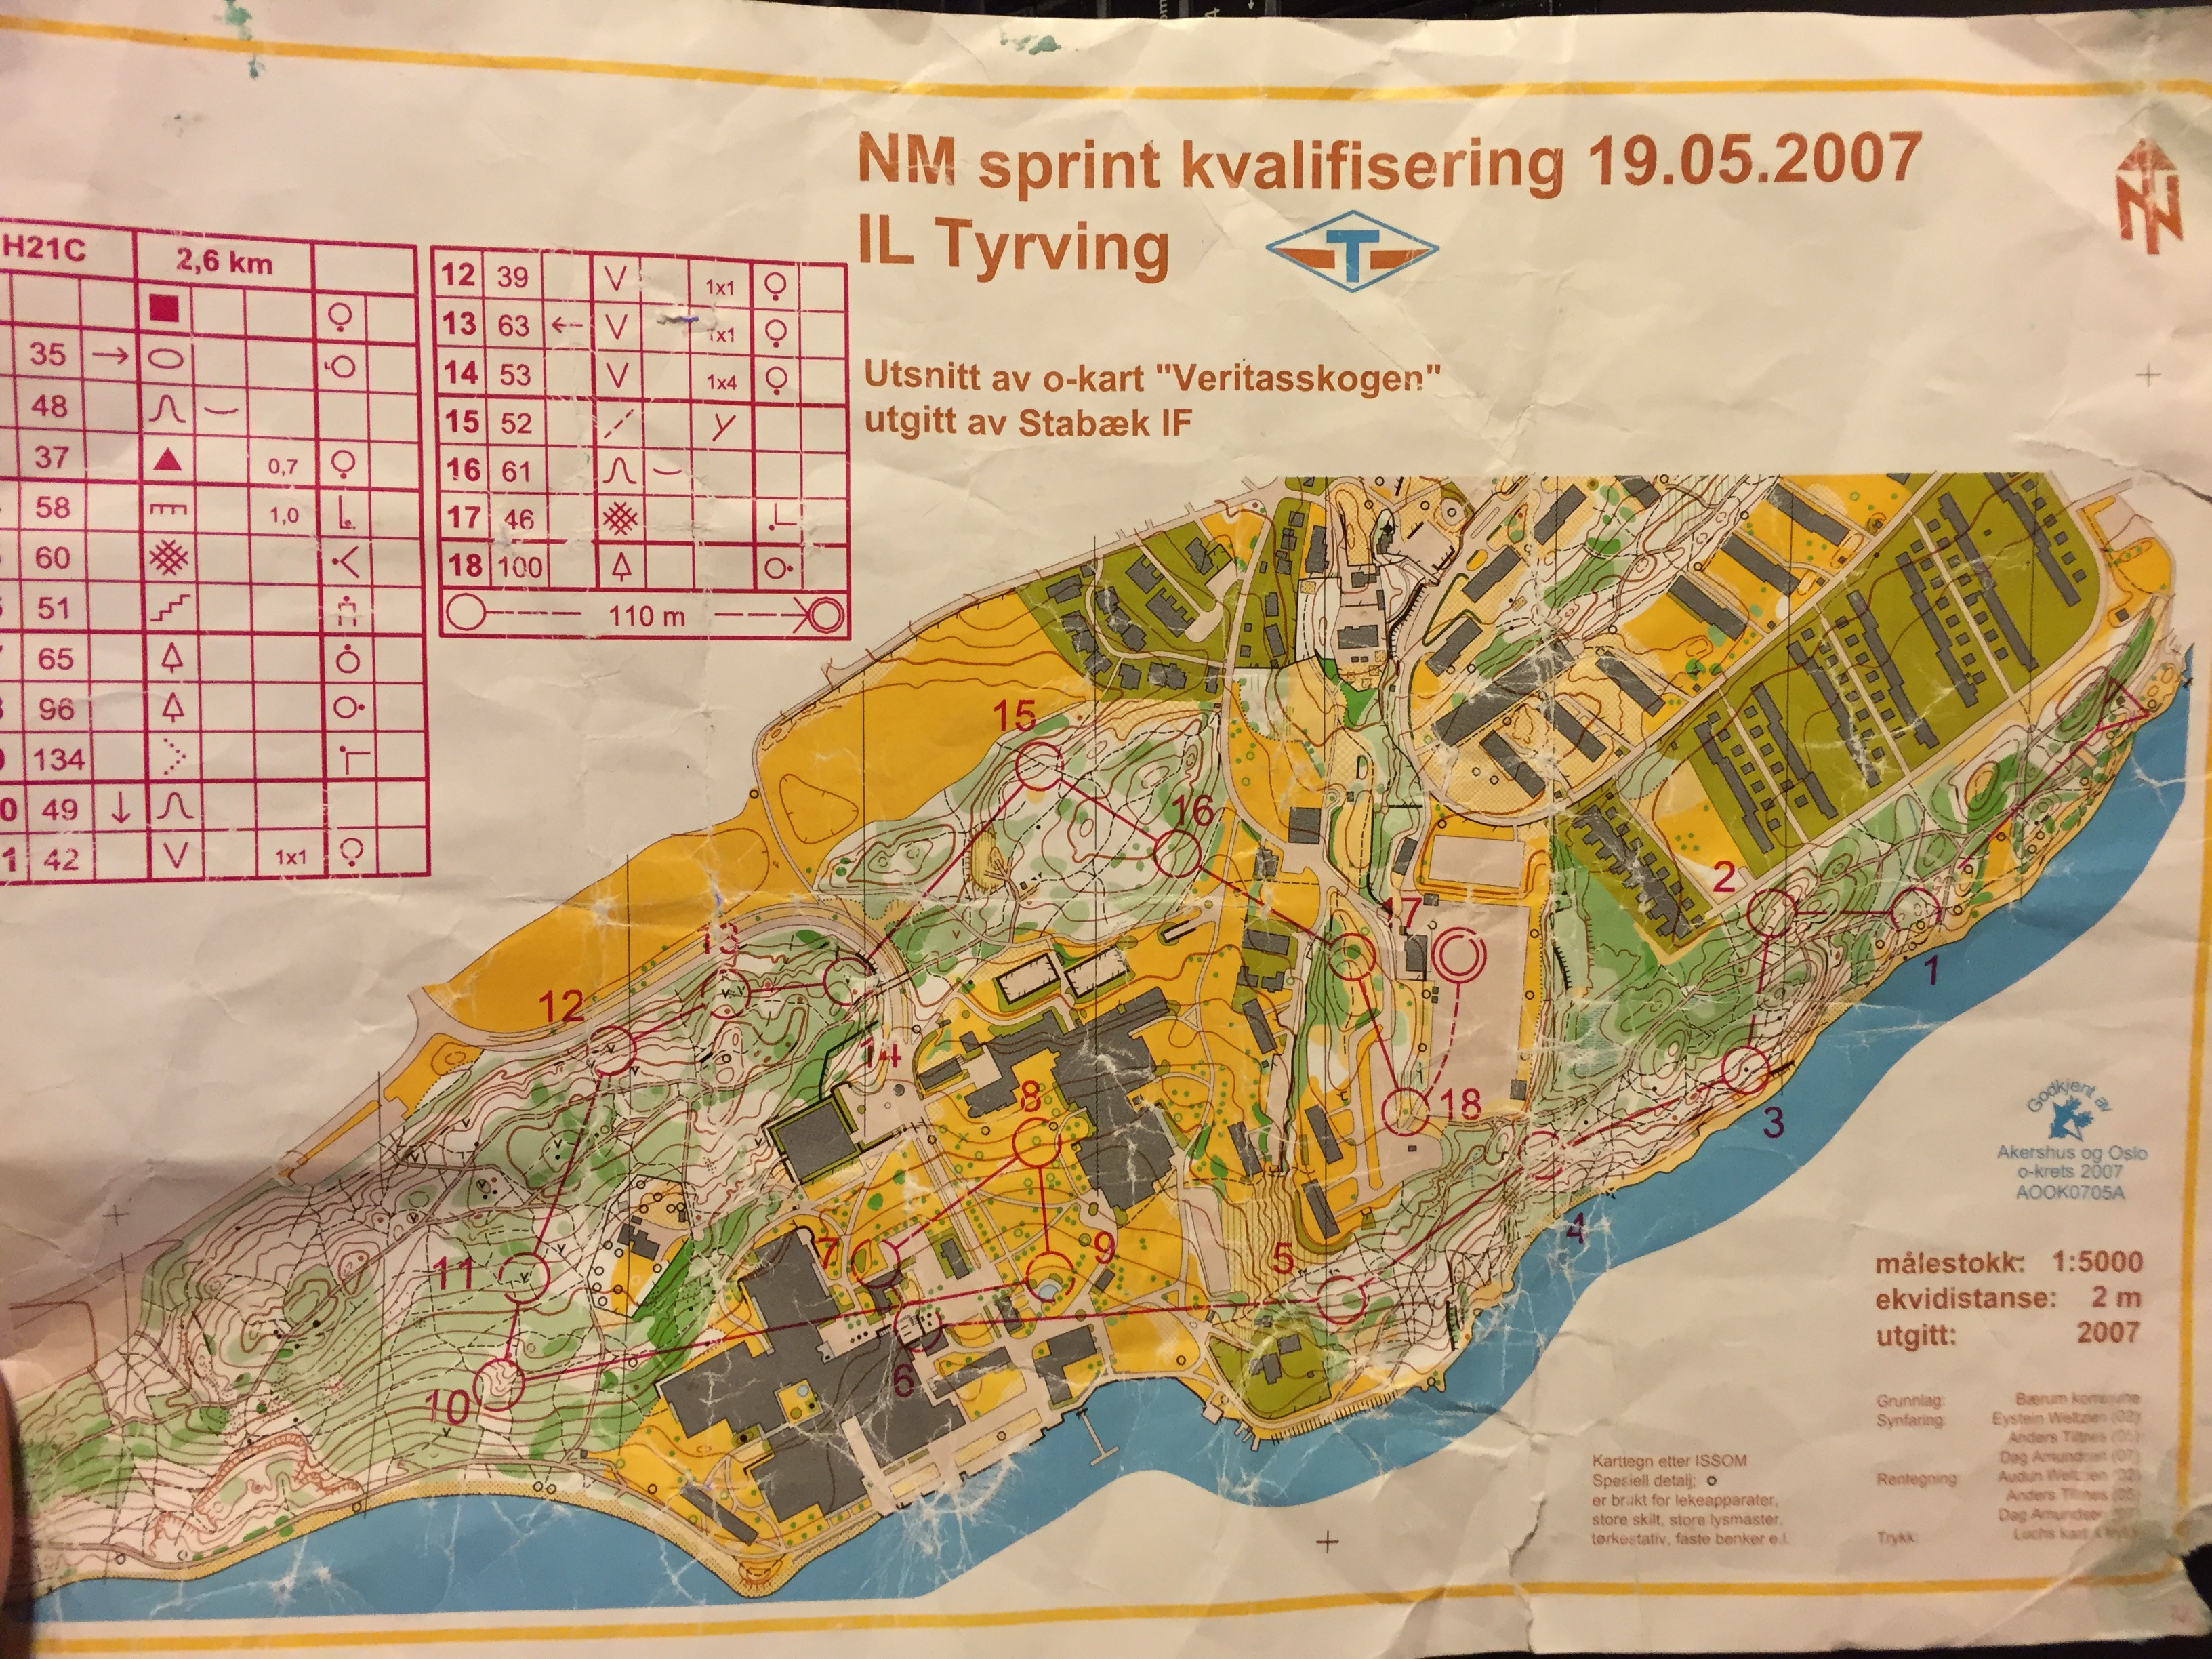 NM Sprint Kvalifisering 2007 (19/05/2007)